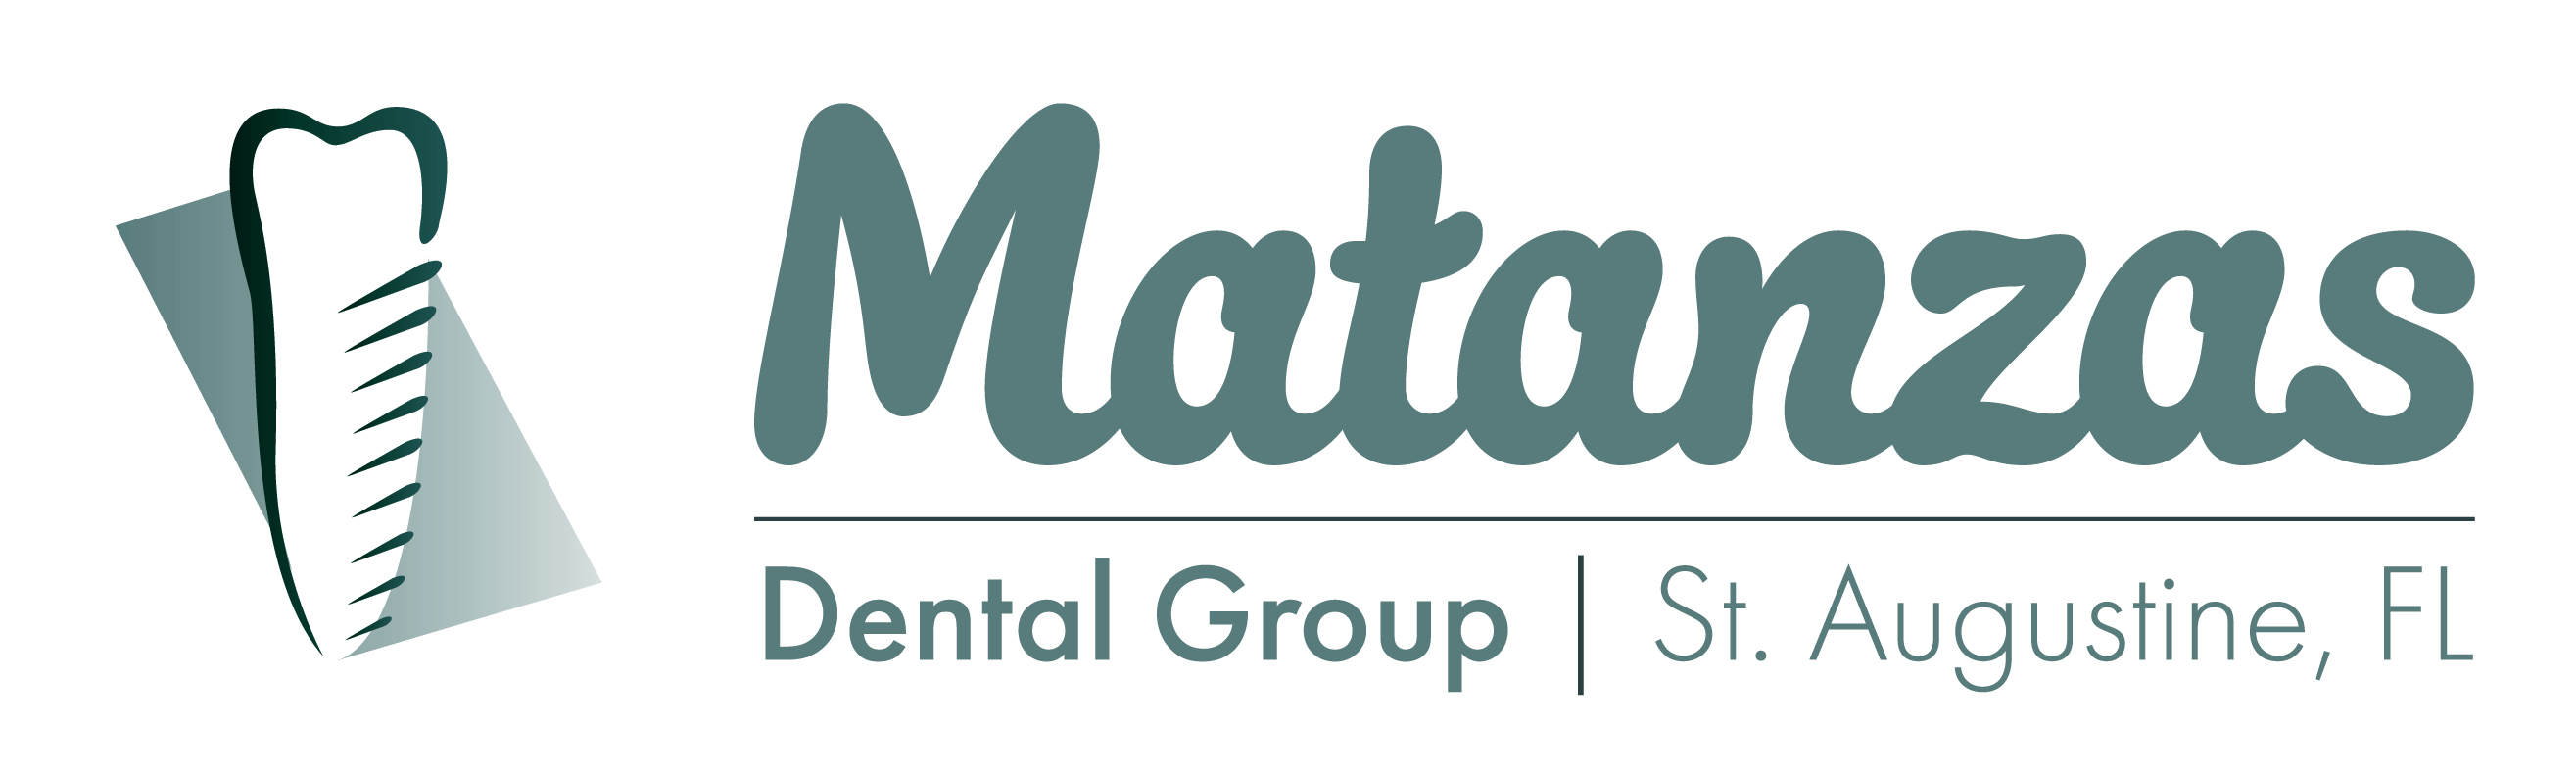 Matanzas Dental Group St. Augustine FL logo